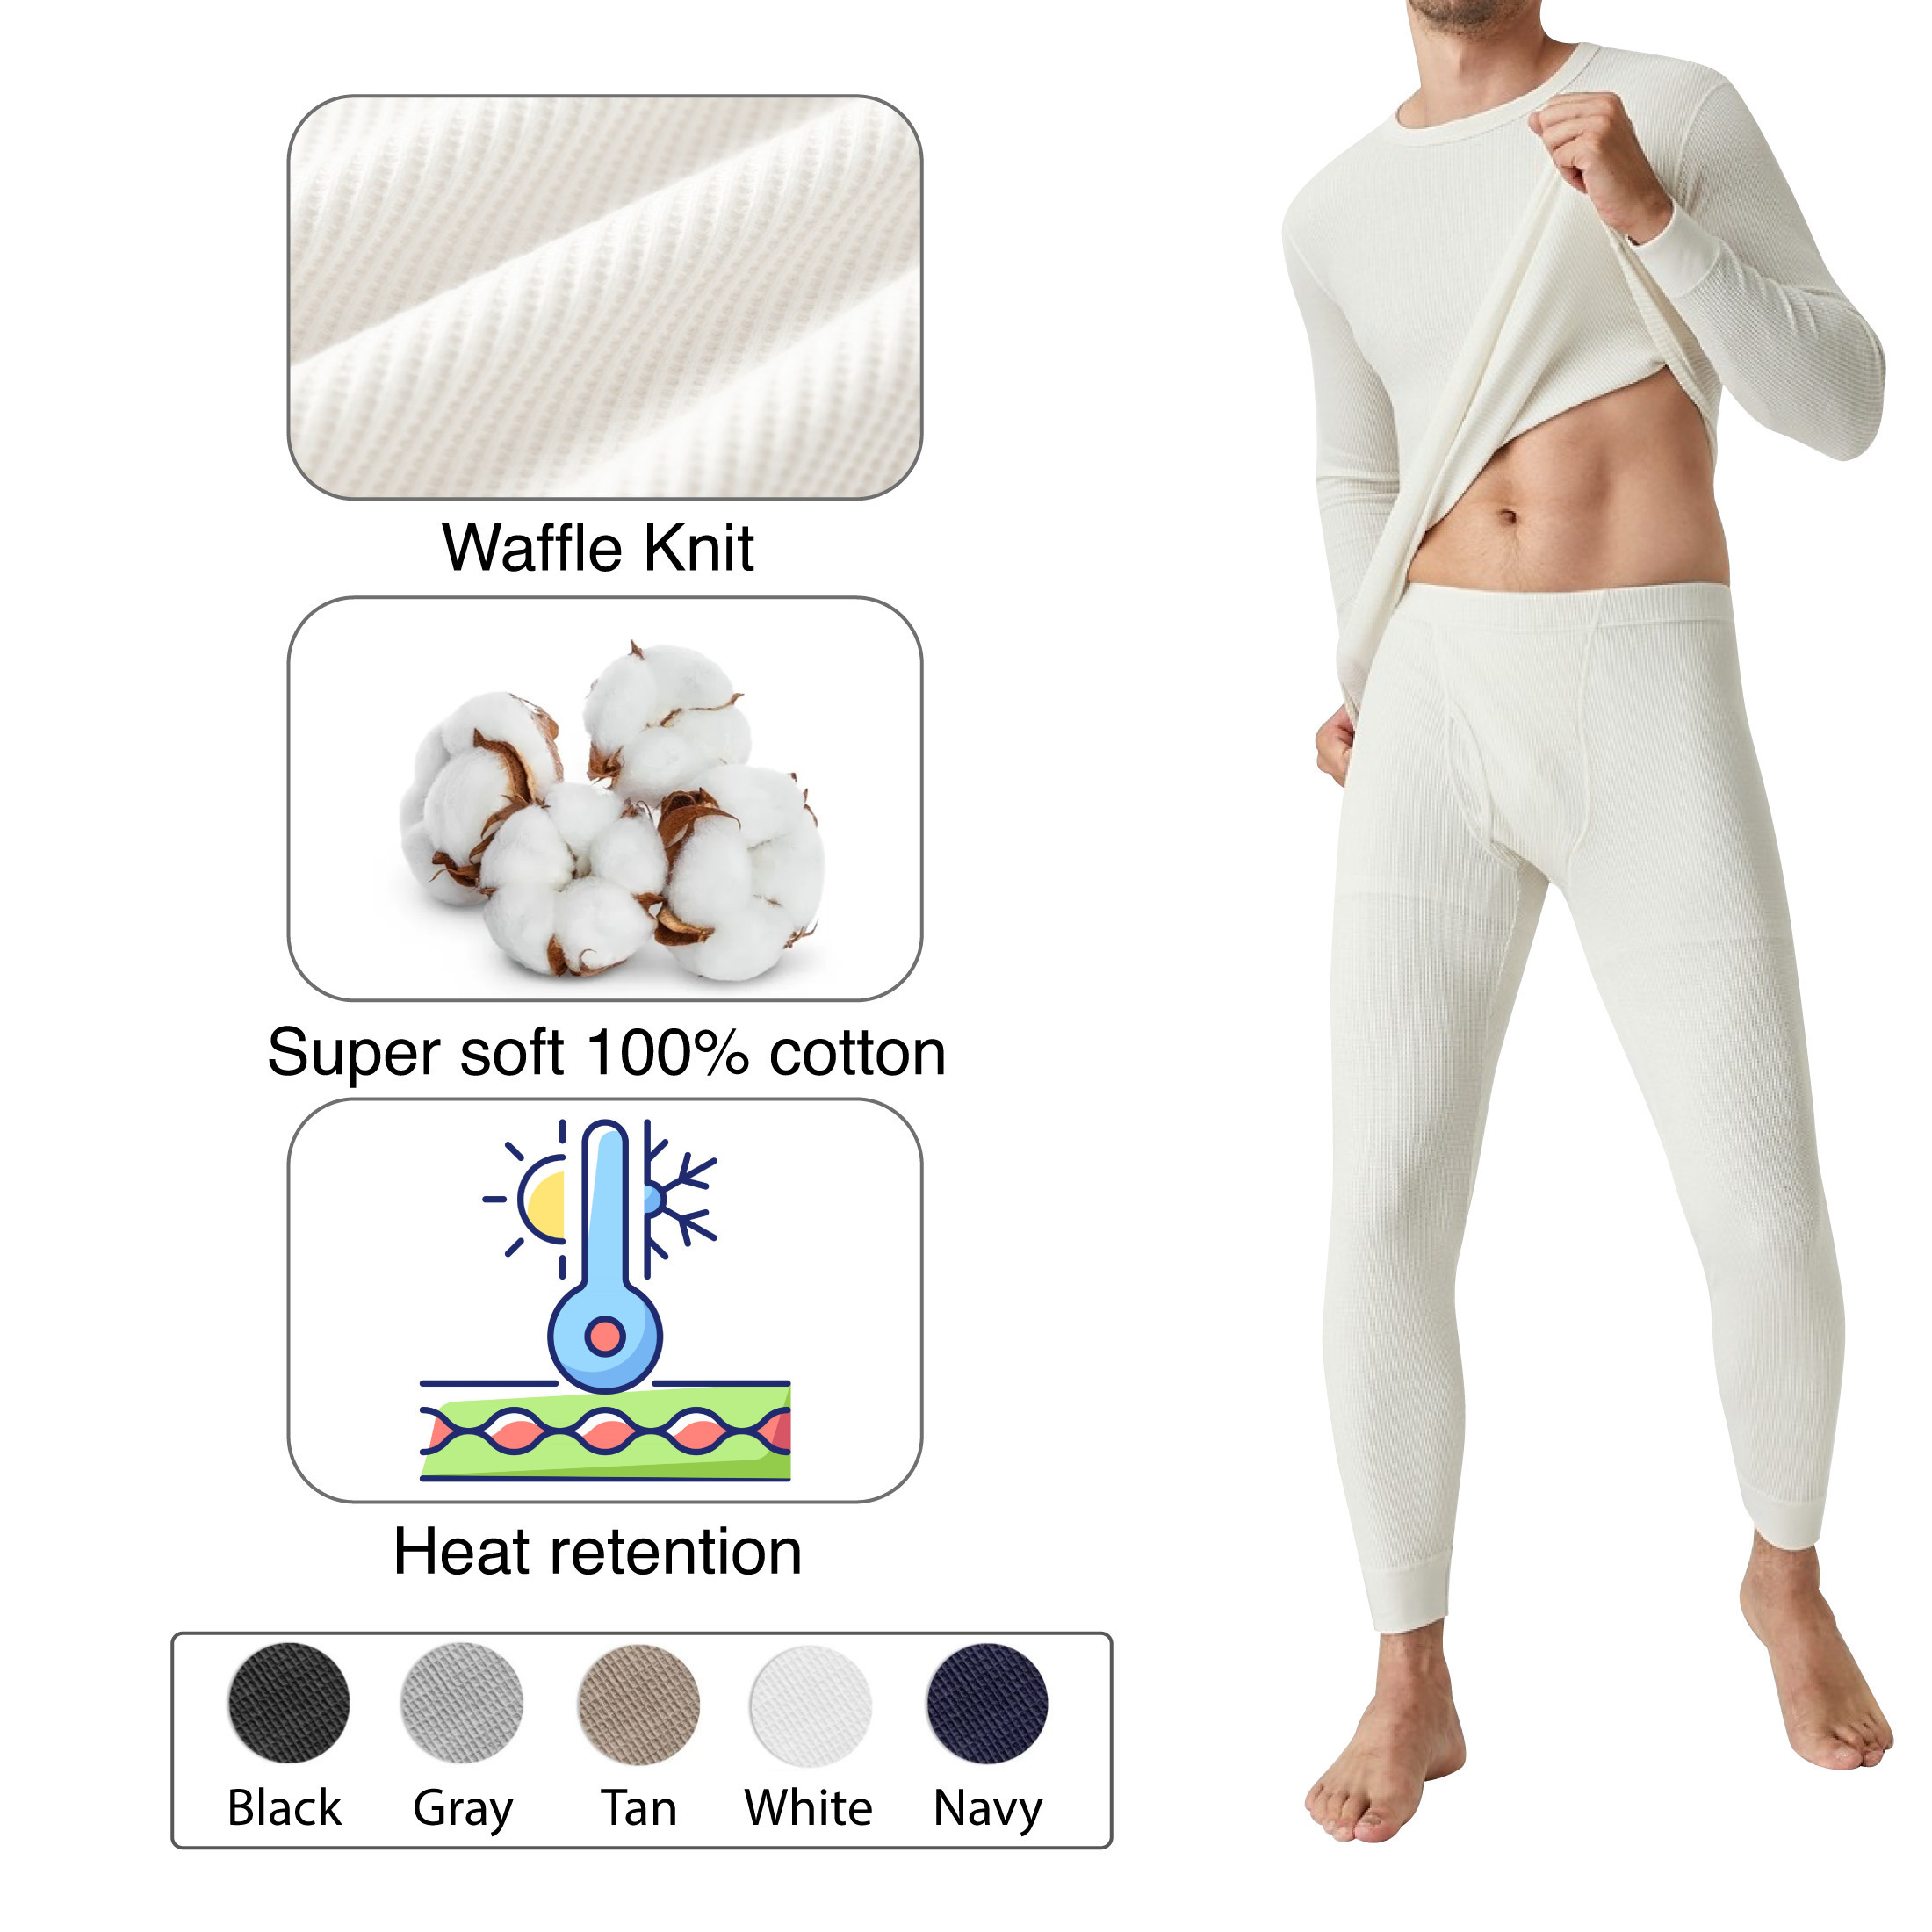 2-Piece: Men's Super Soft Cotton Waffle Knit Winter Thermal Underwear Set - White, 2X-Large